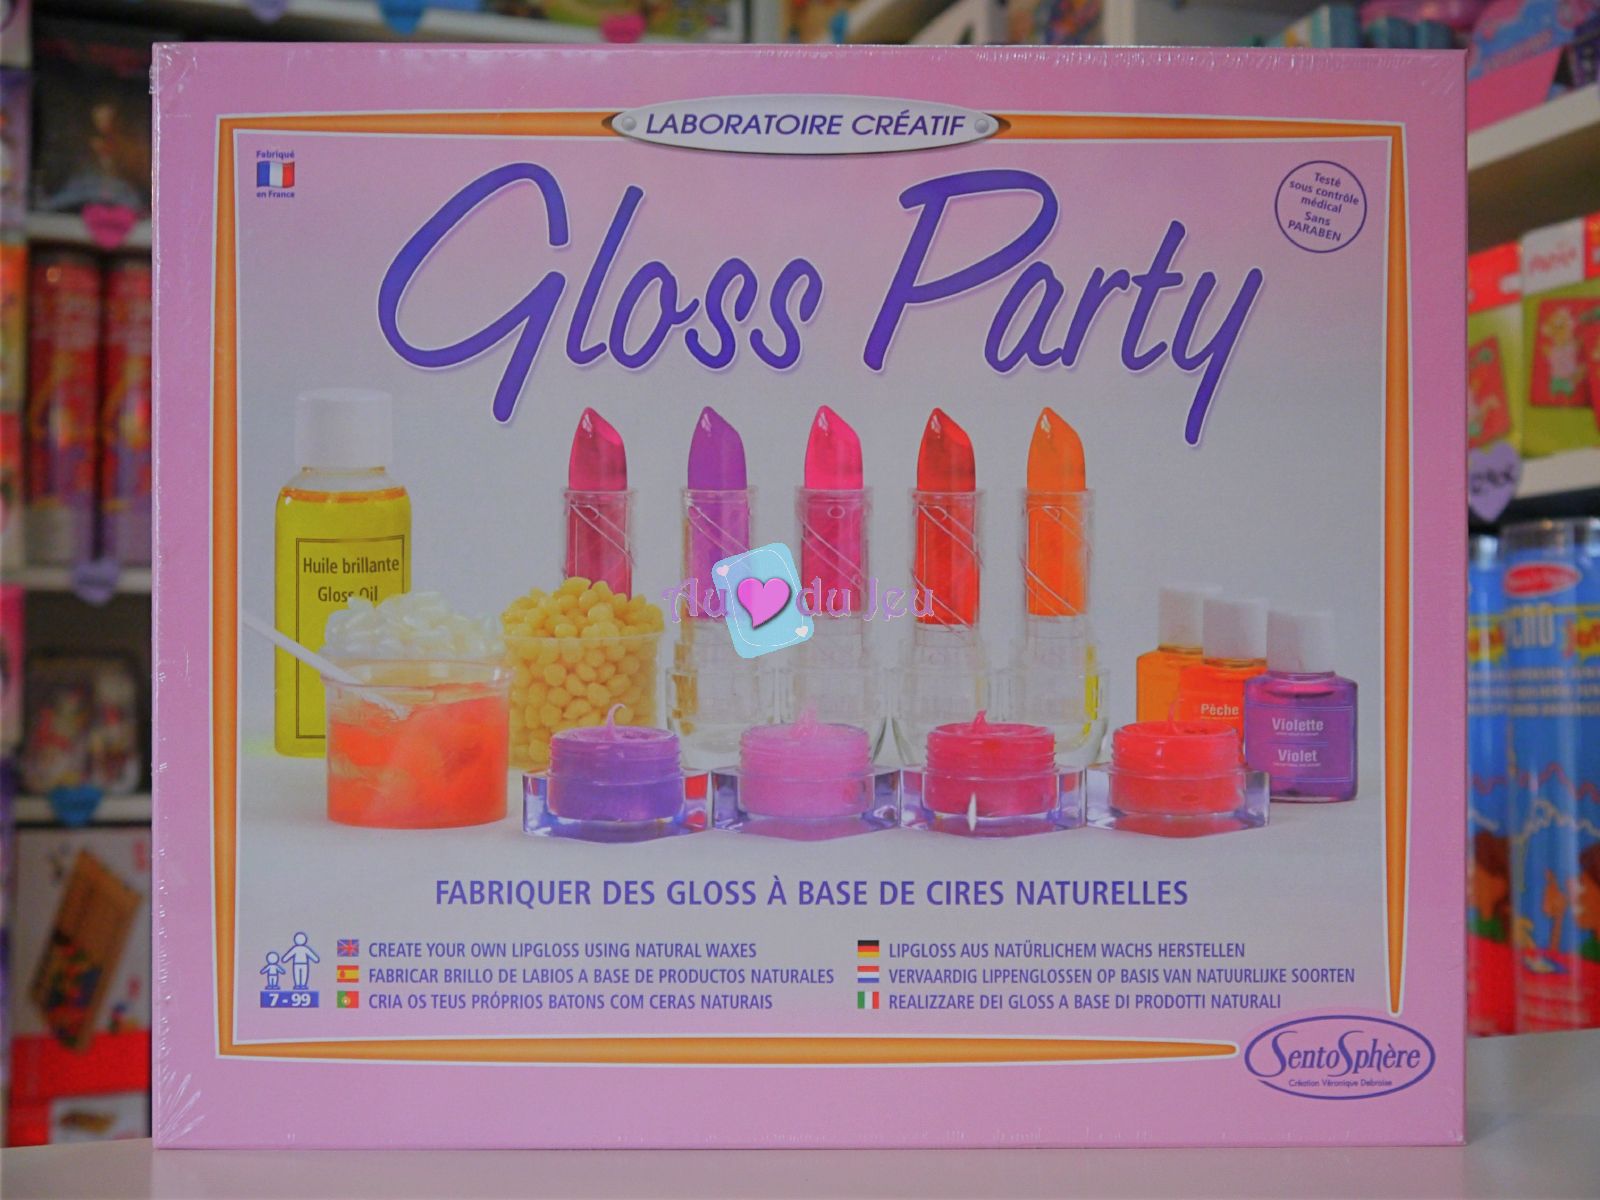 Gloss Party Sentosphère